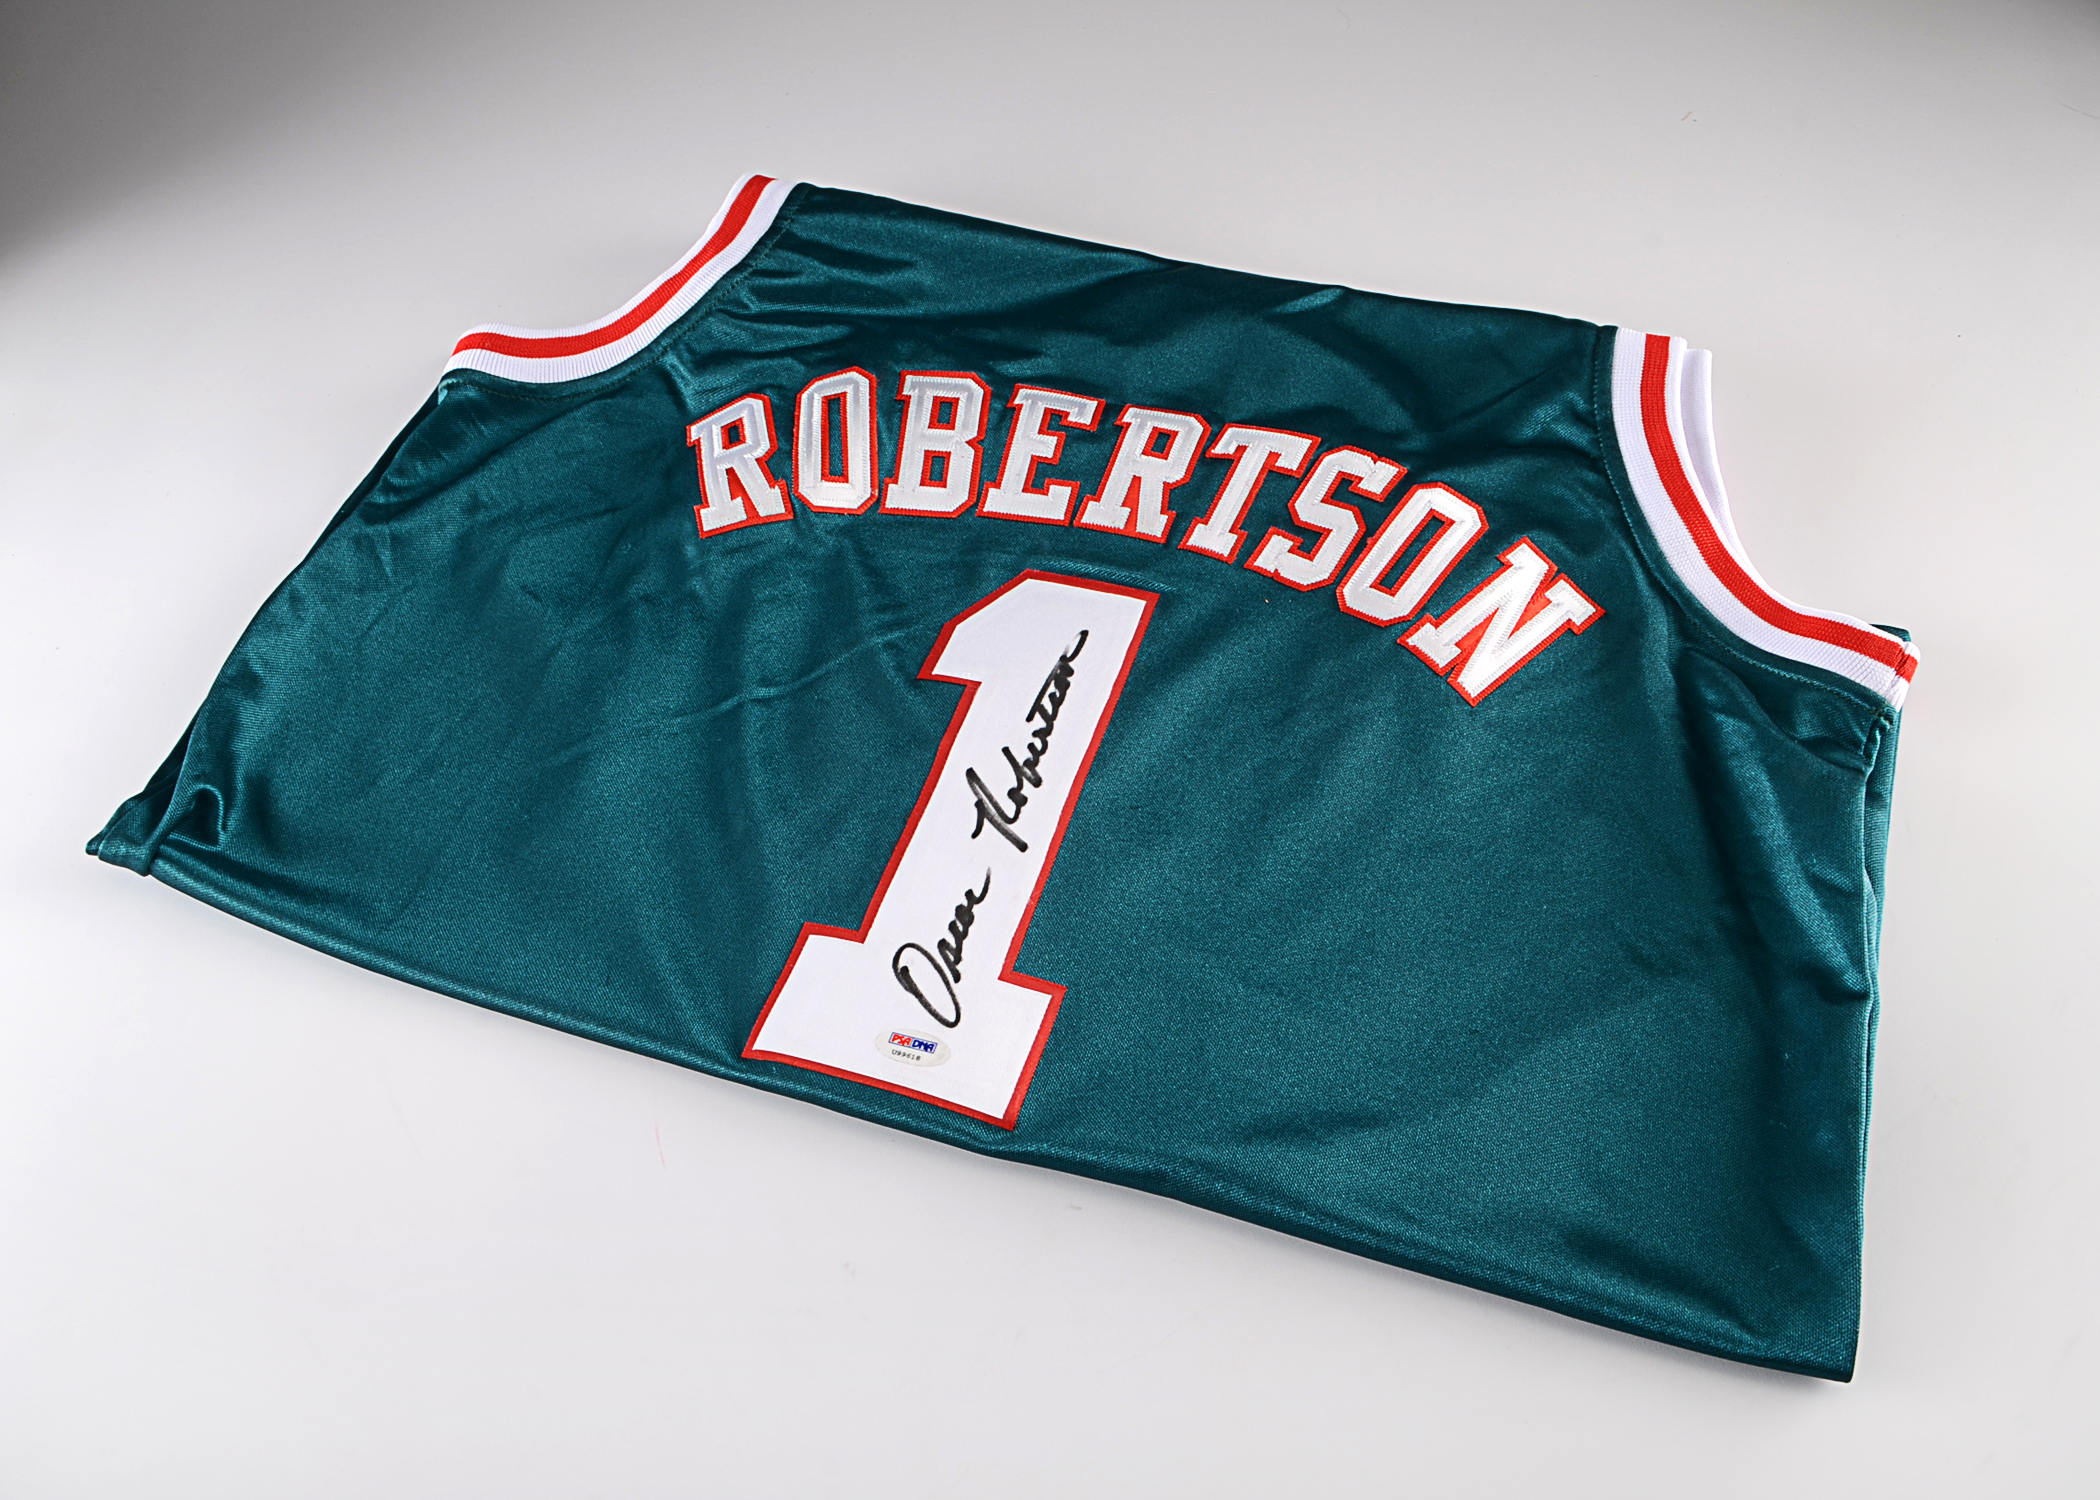 oscar robinson jersey